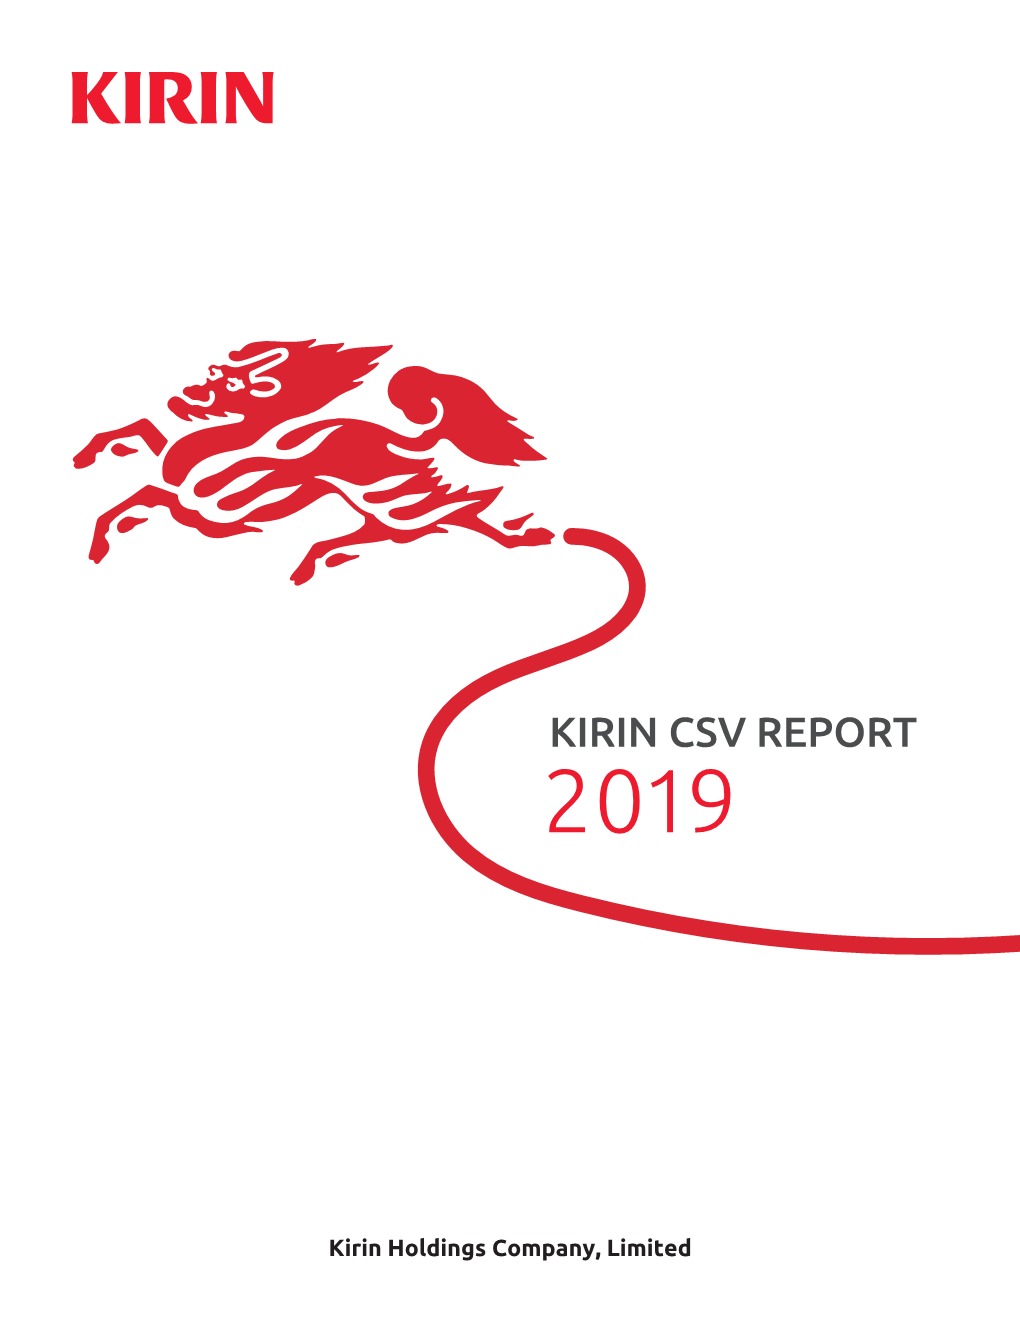 Kirin Csv Report 2019